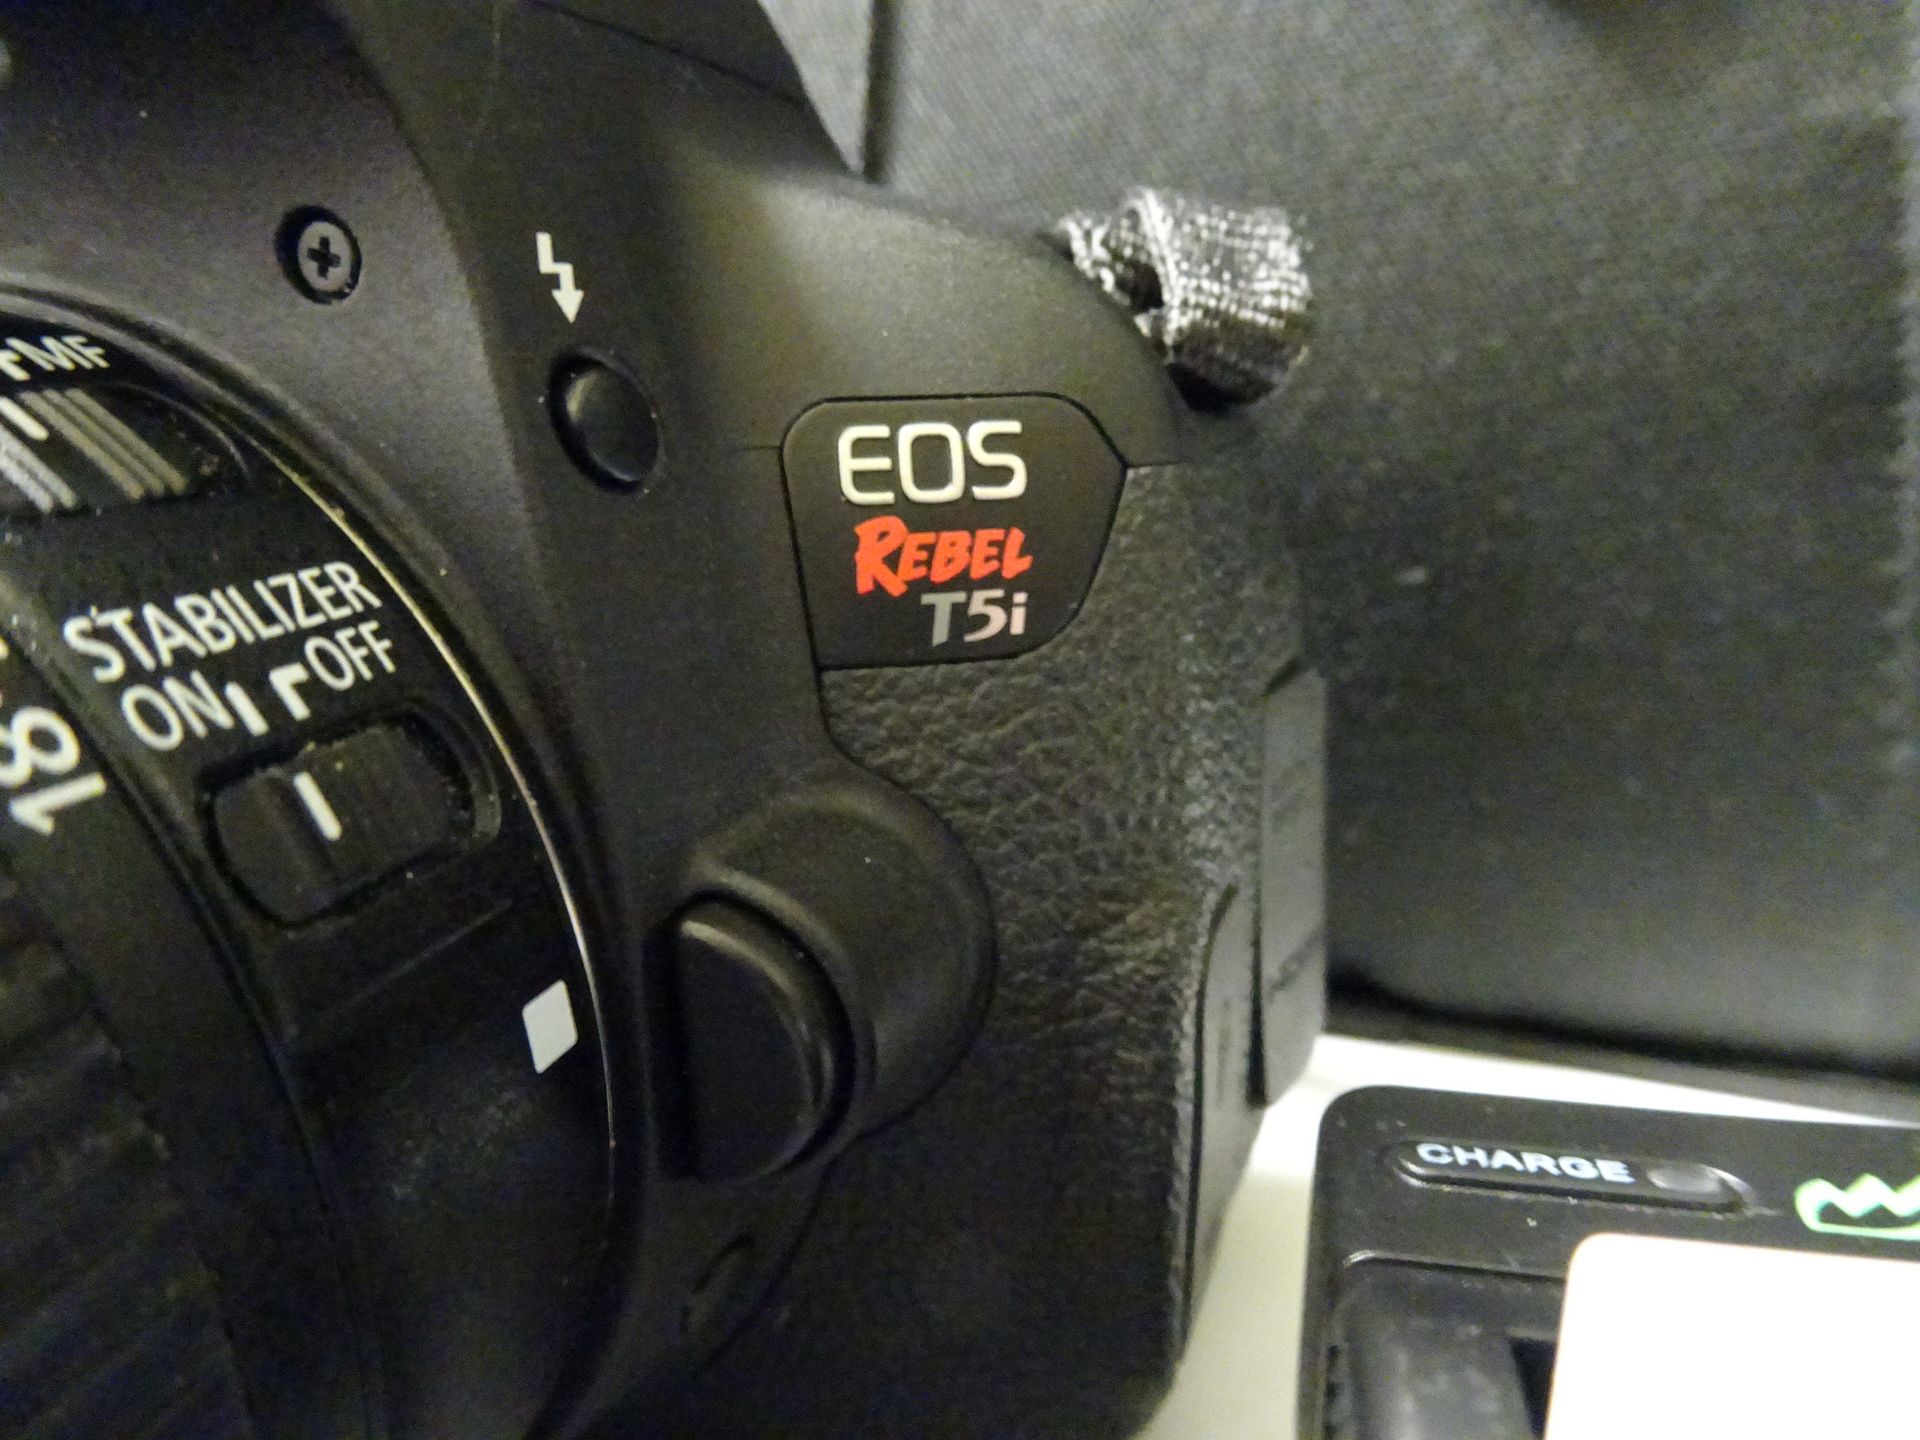 Canon EOS Rebel T5i DSLR sn 302075003371 w/ Canon EF-S 18-55mm 1:3.5-5.6 IS STM /58mm Lens, (2) - Image 10 of 15